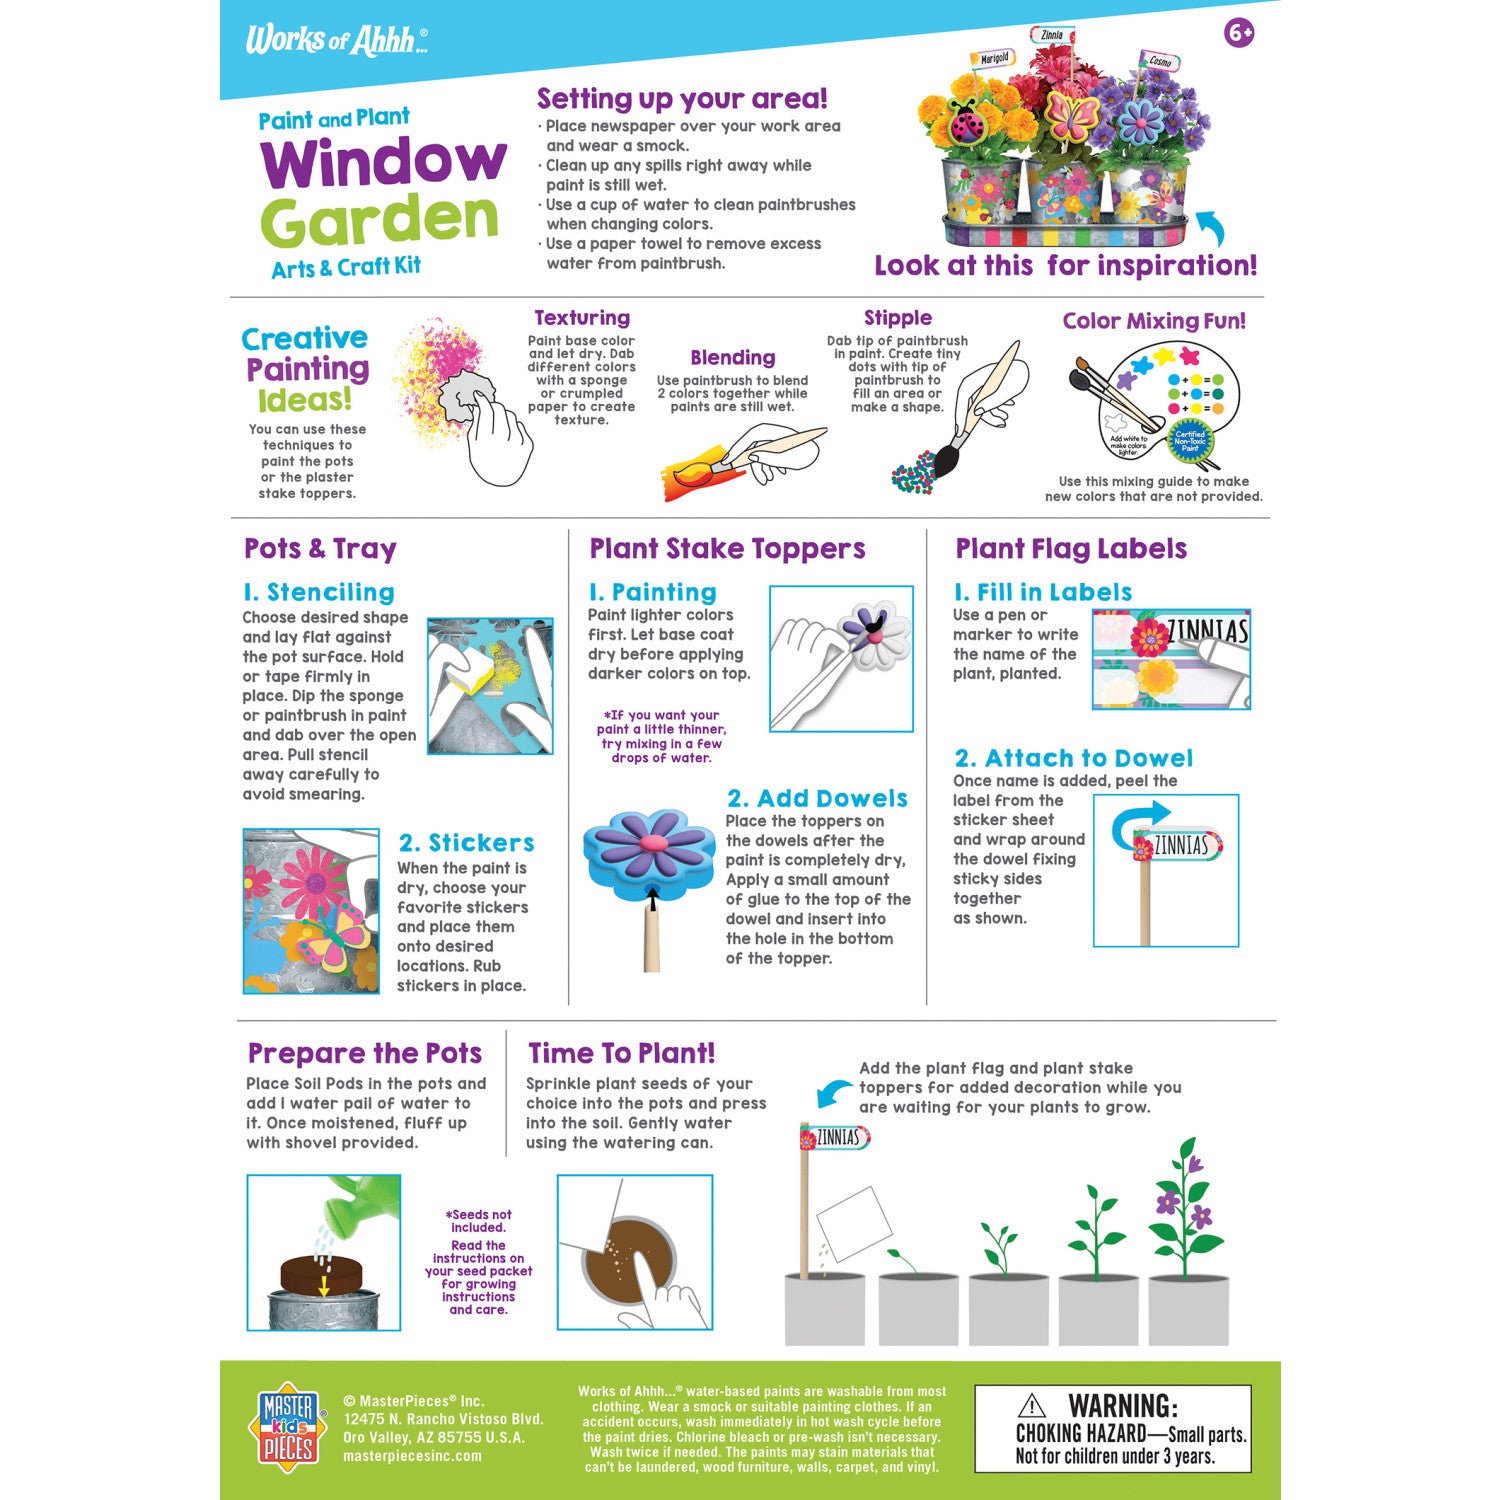 Window Garden Arts & Craft Kit